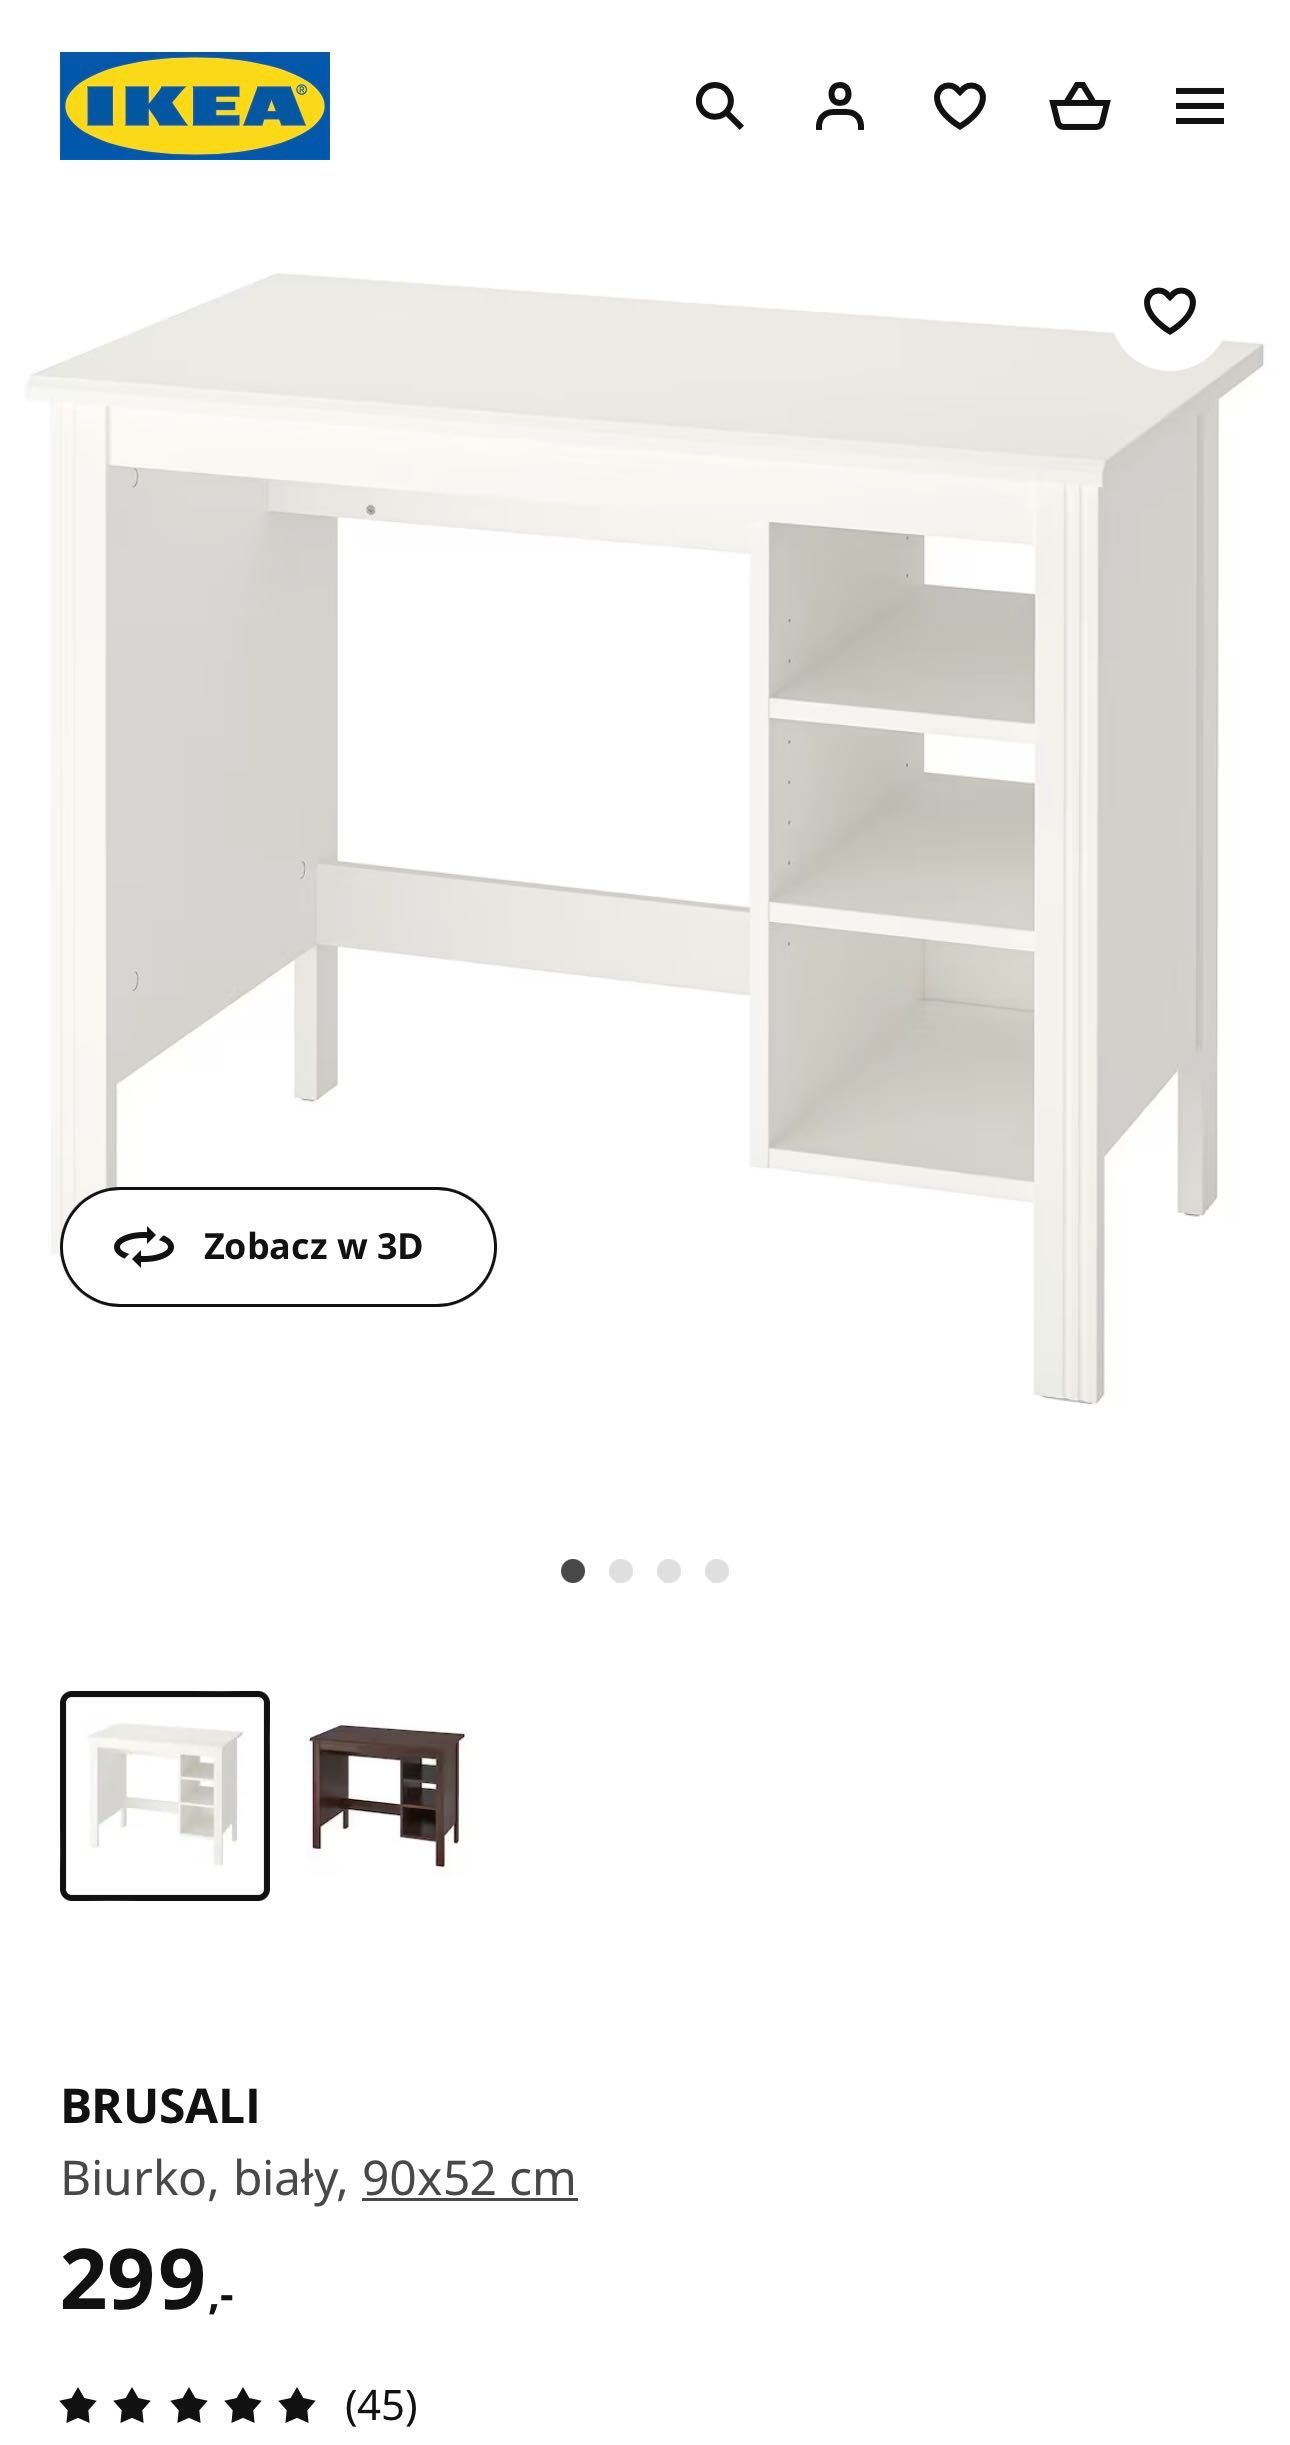 Biurko Ikea Brusali białe 90x52cm